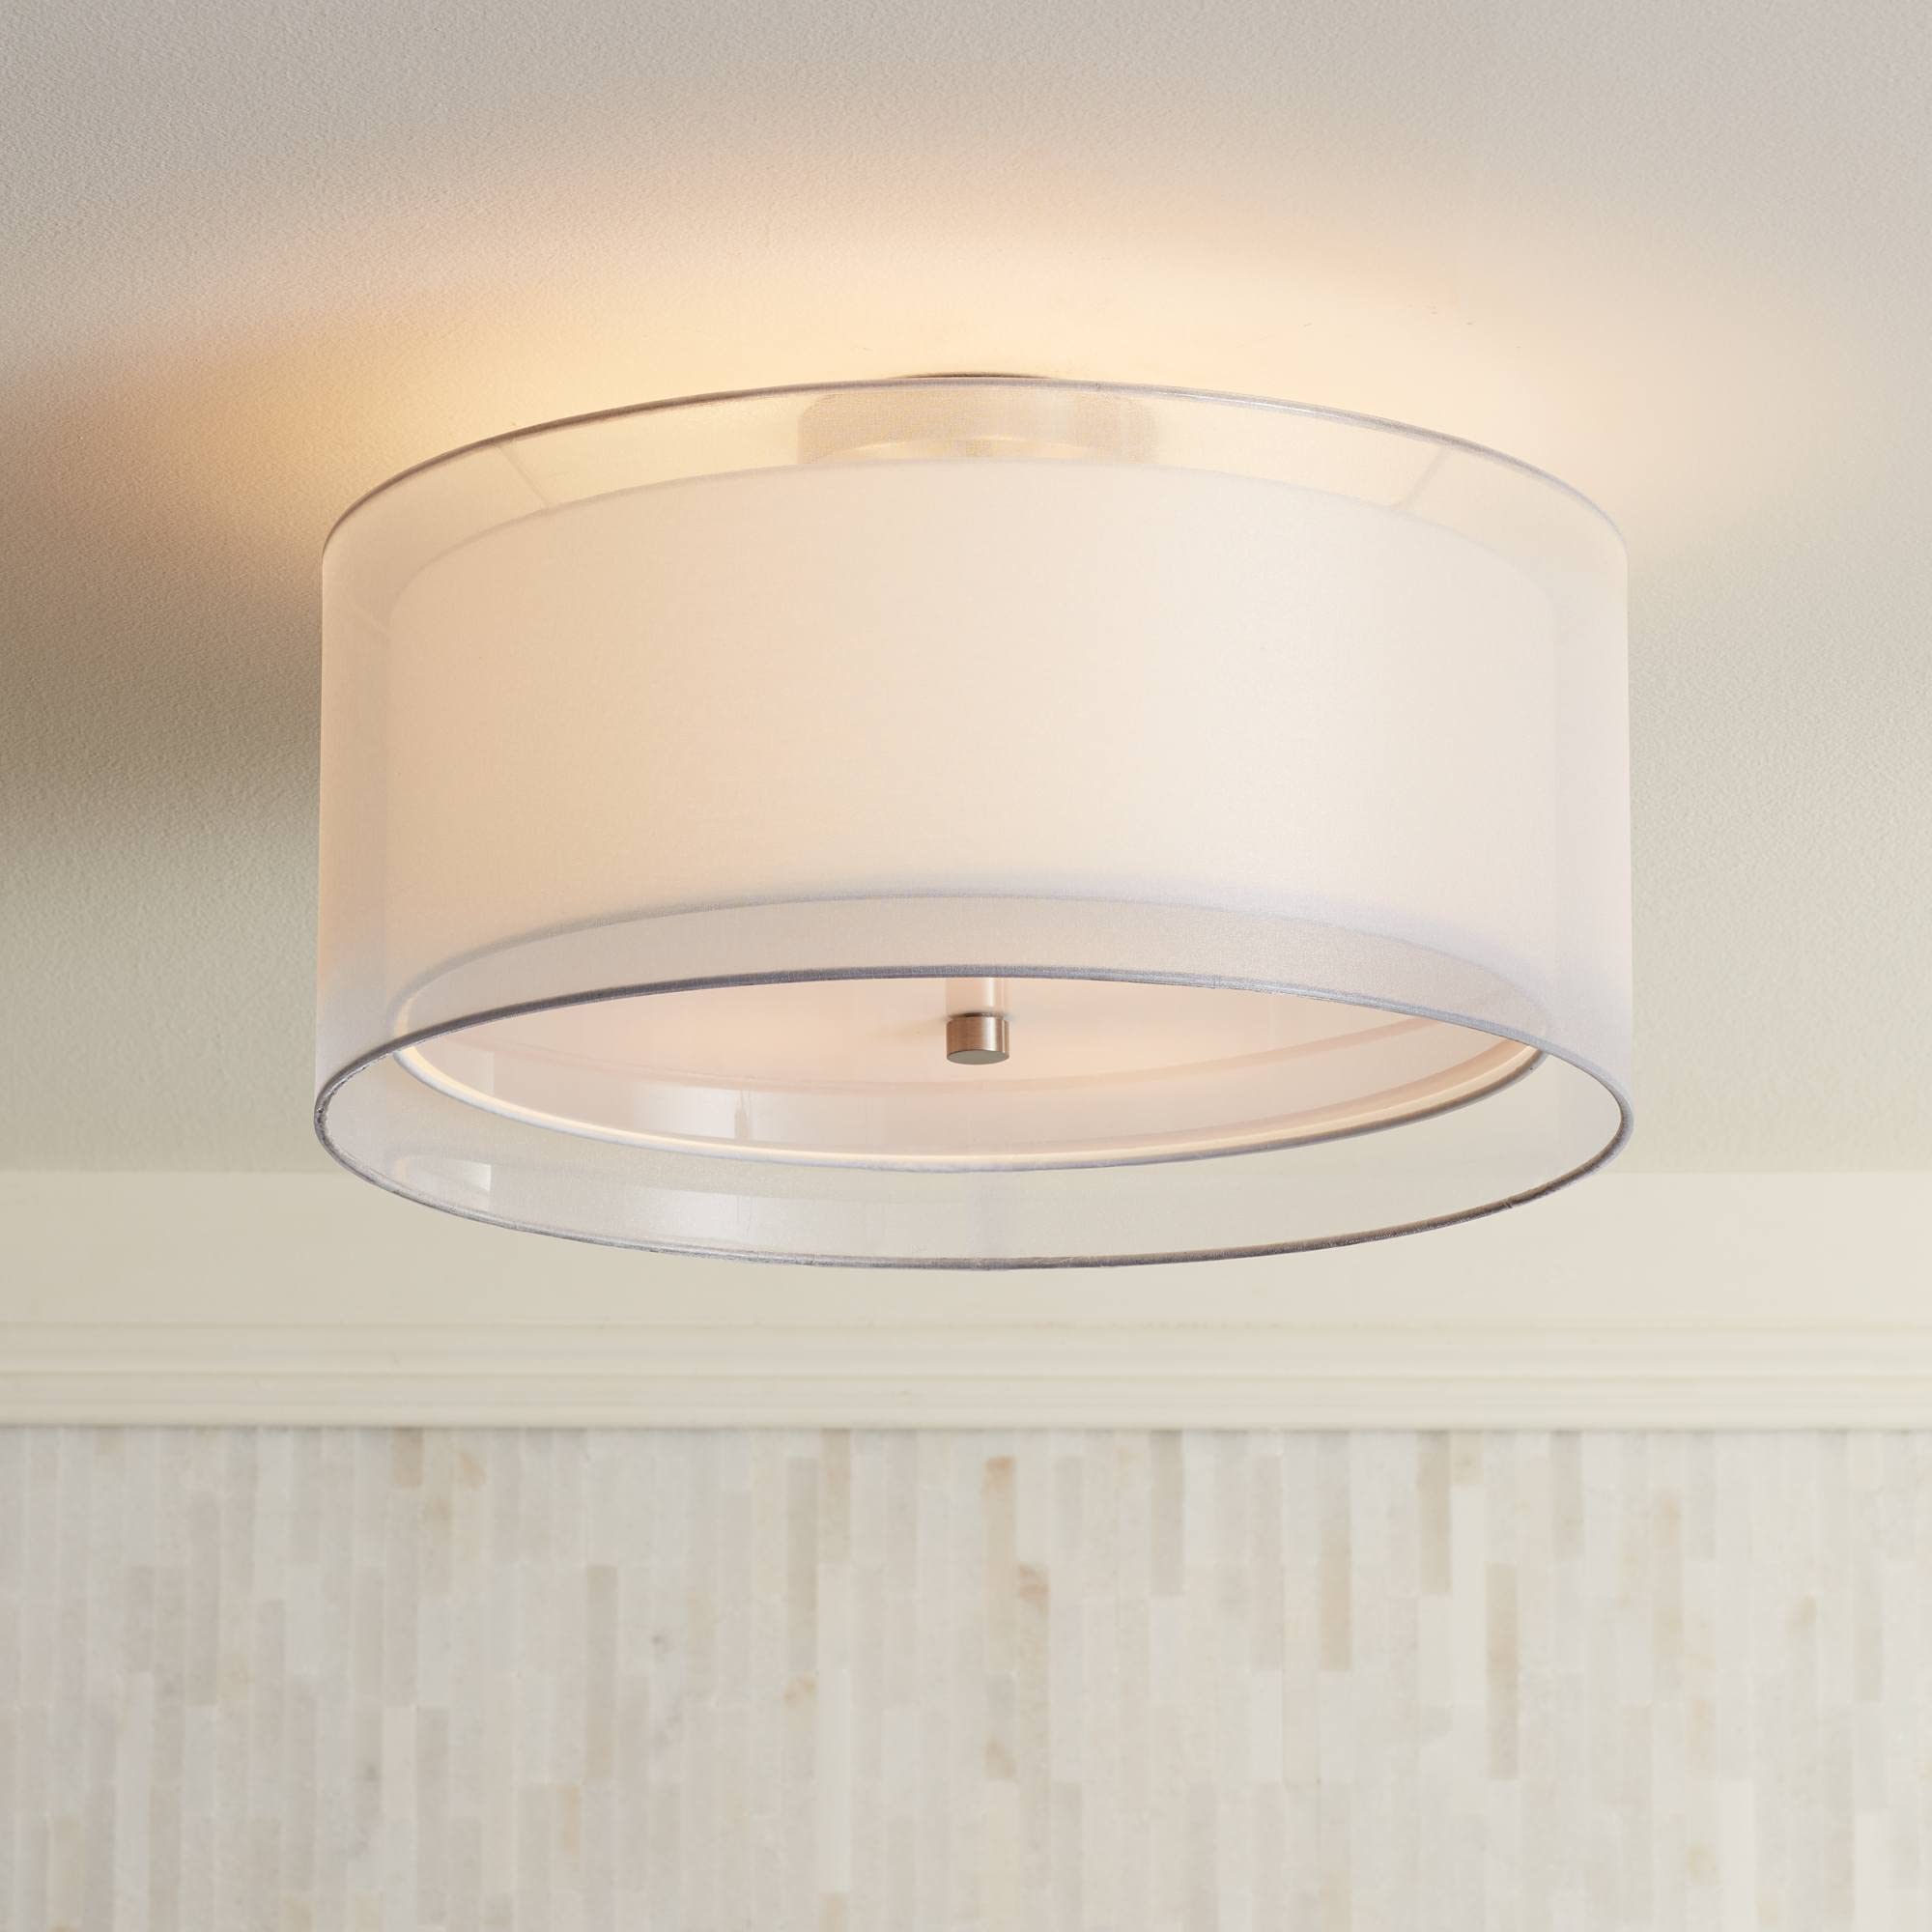 Possini Euro Design Modern Close to Ceiling Light Flush Mount Fixture Polished Nickel 18